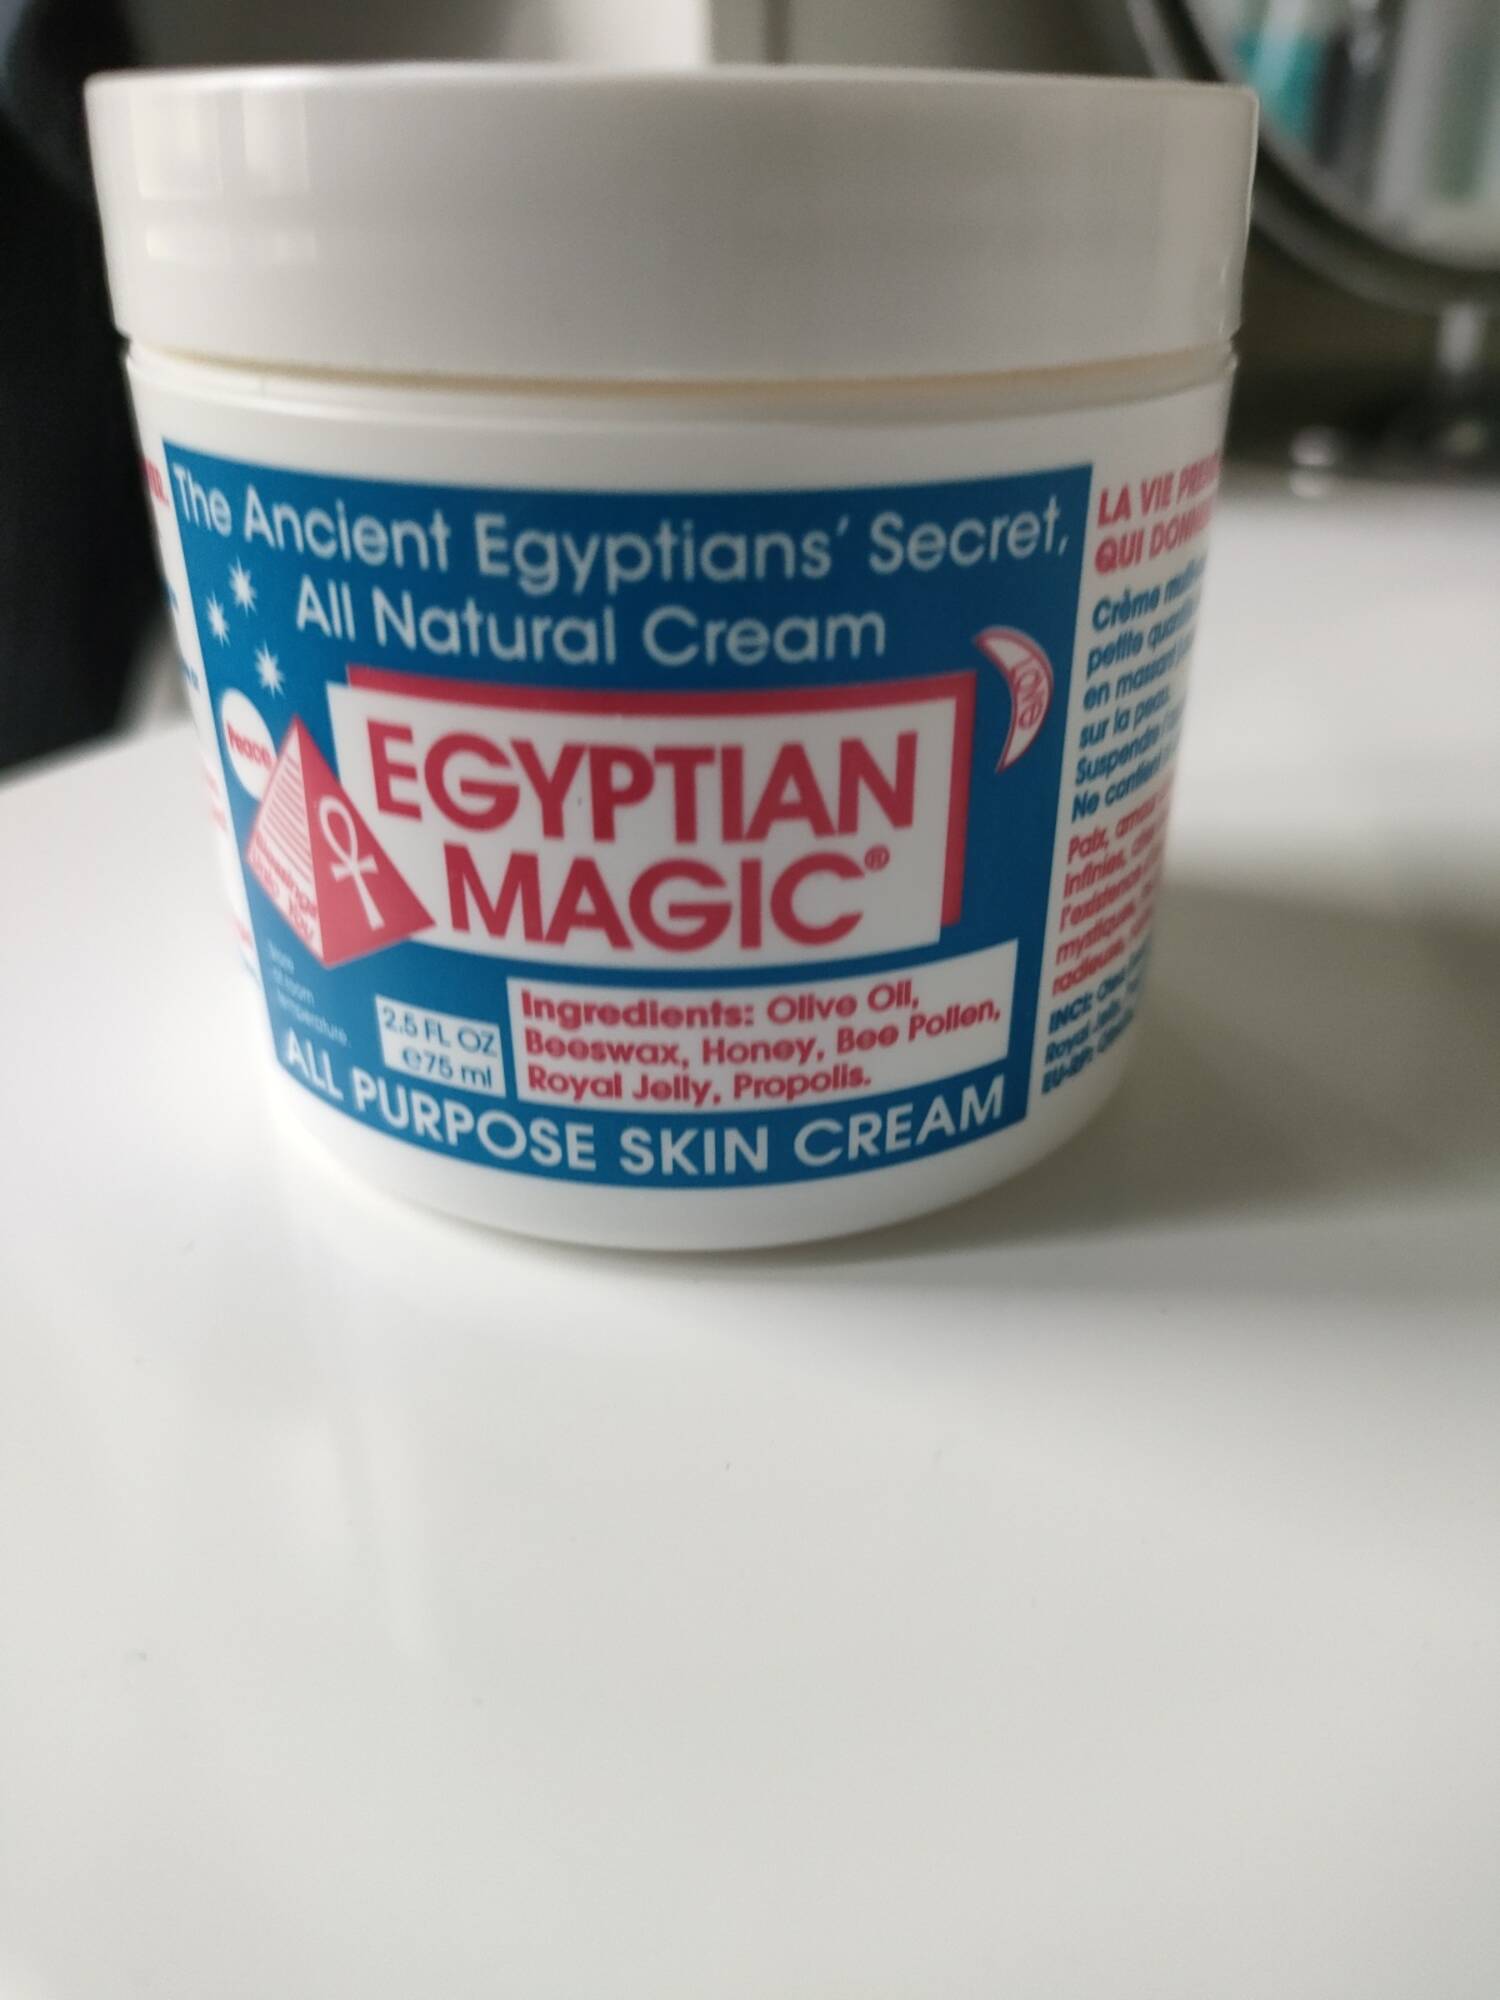 Composition EGYPTIAN MAGIC The ancient Egyptians' secret - All purpose skin  cream - UFC-Que Choisir